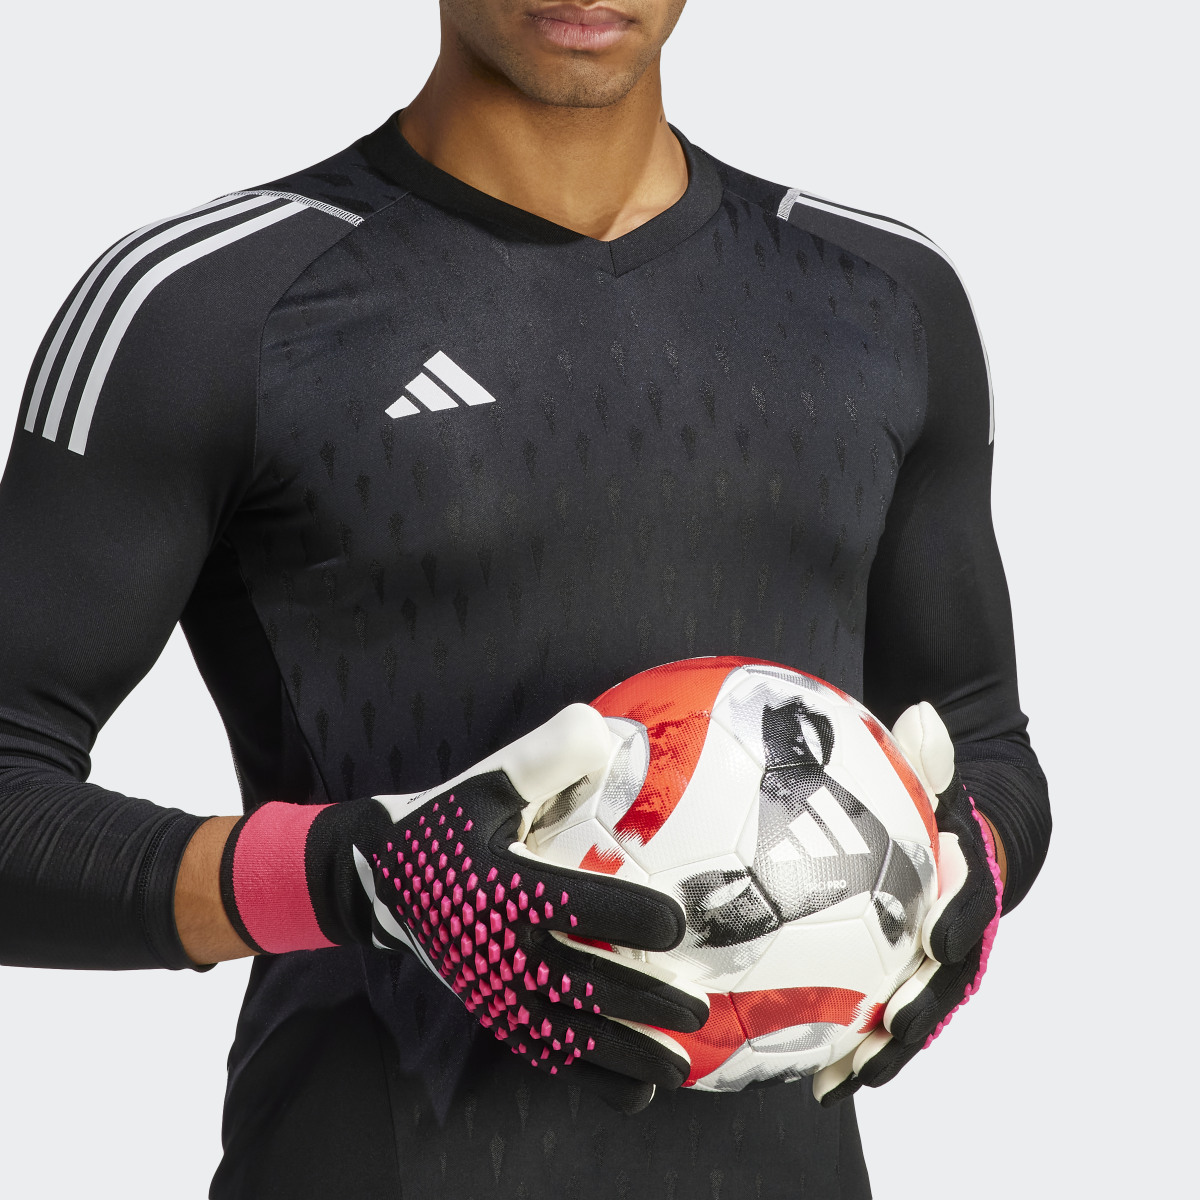 Adidas Predator Pro Promo Goalkeeper Gloves. 6